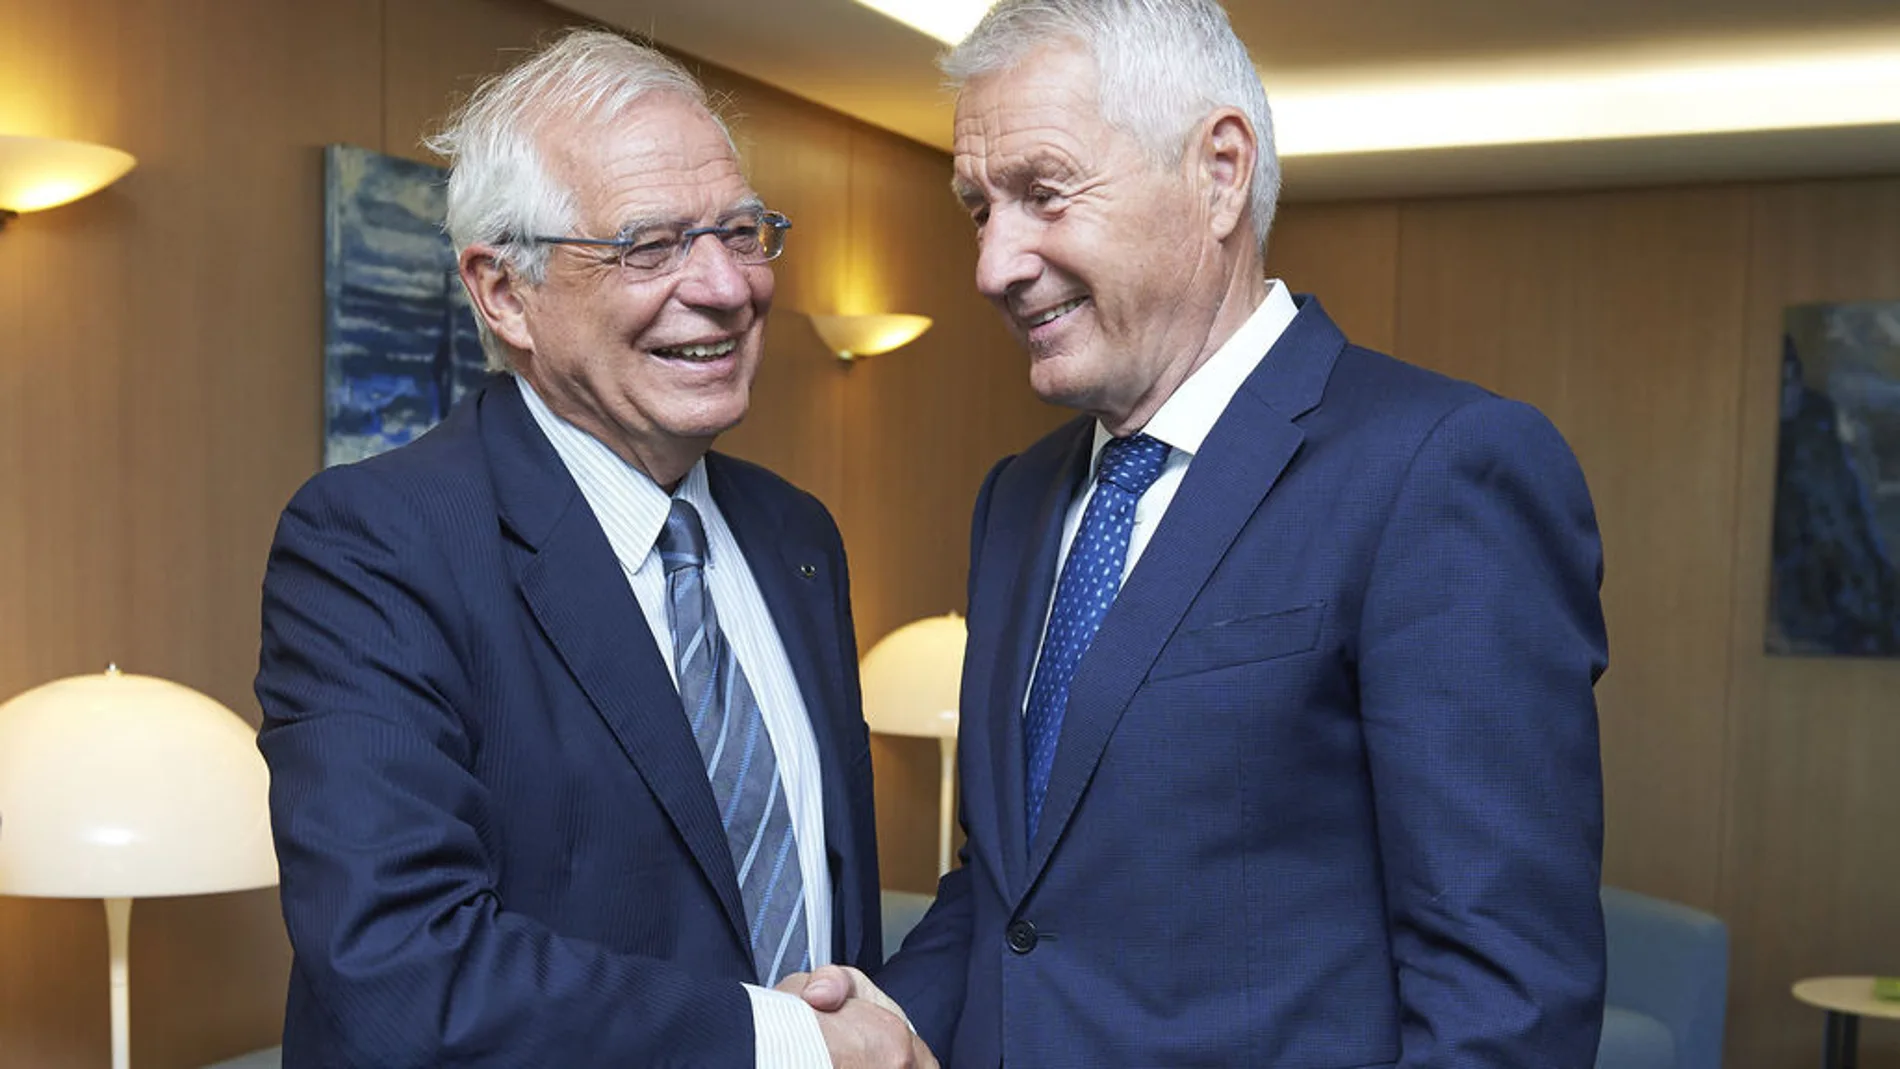 Borrell junto a Thorbjorn Jagand (Foto: Consejo de Europa)